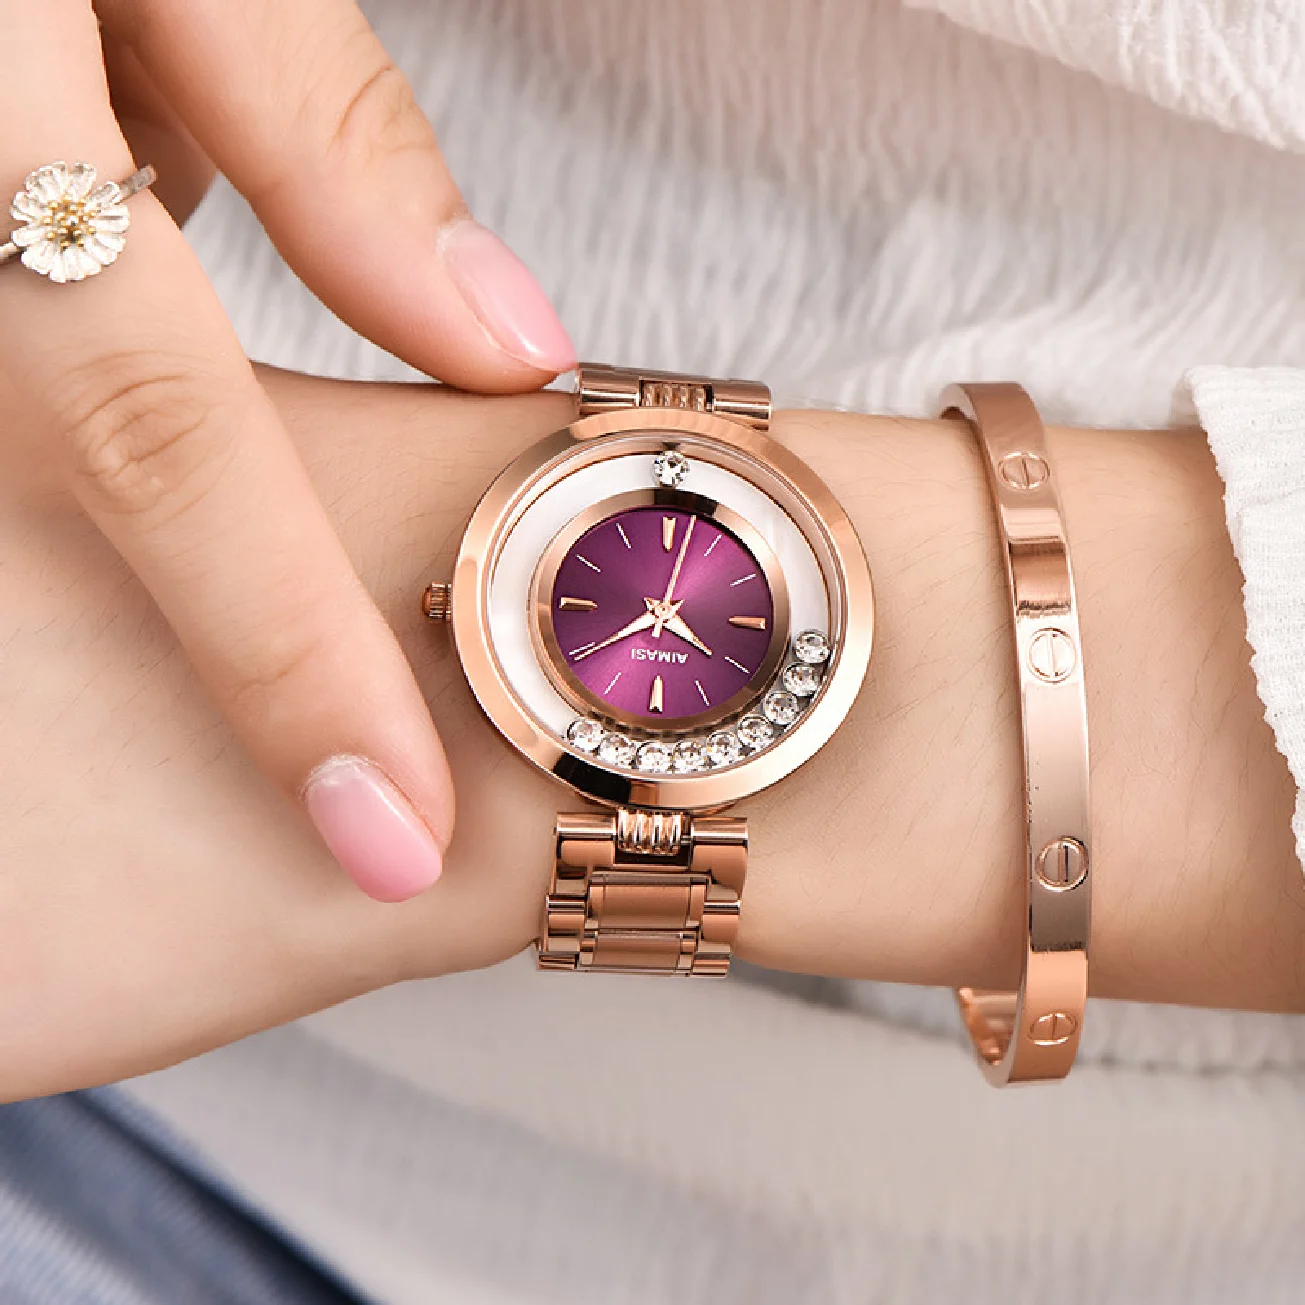 AIMASI Brand Women's Watches Ladies Fashion Luxury Rose Gold Stainless Steel Watches Ball crystal Women Rhinestone Clocks saat